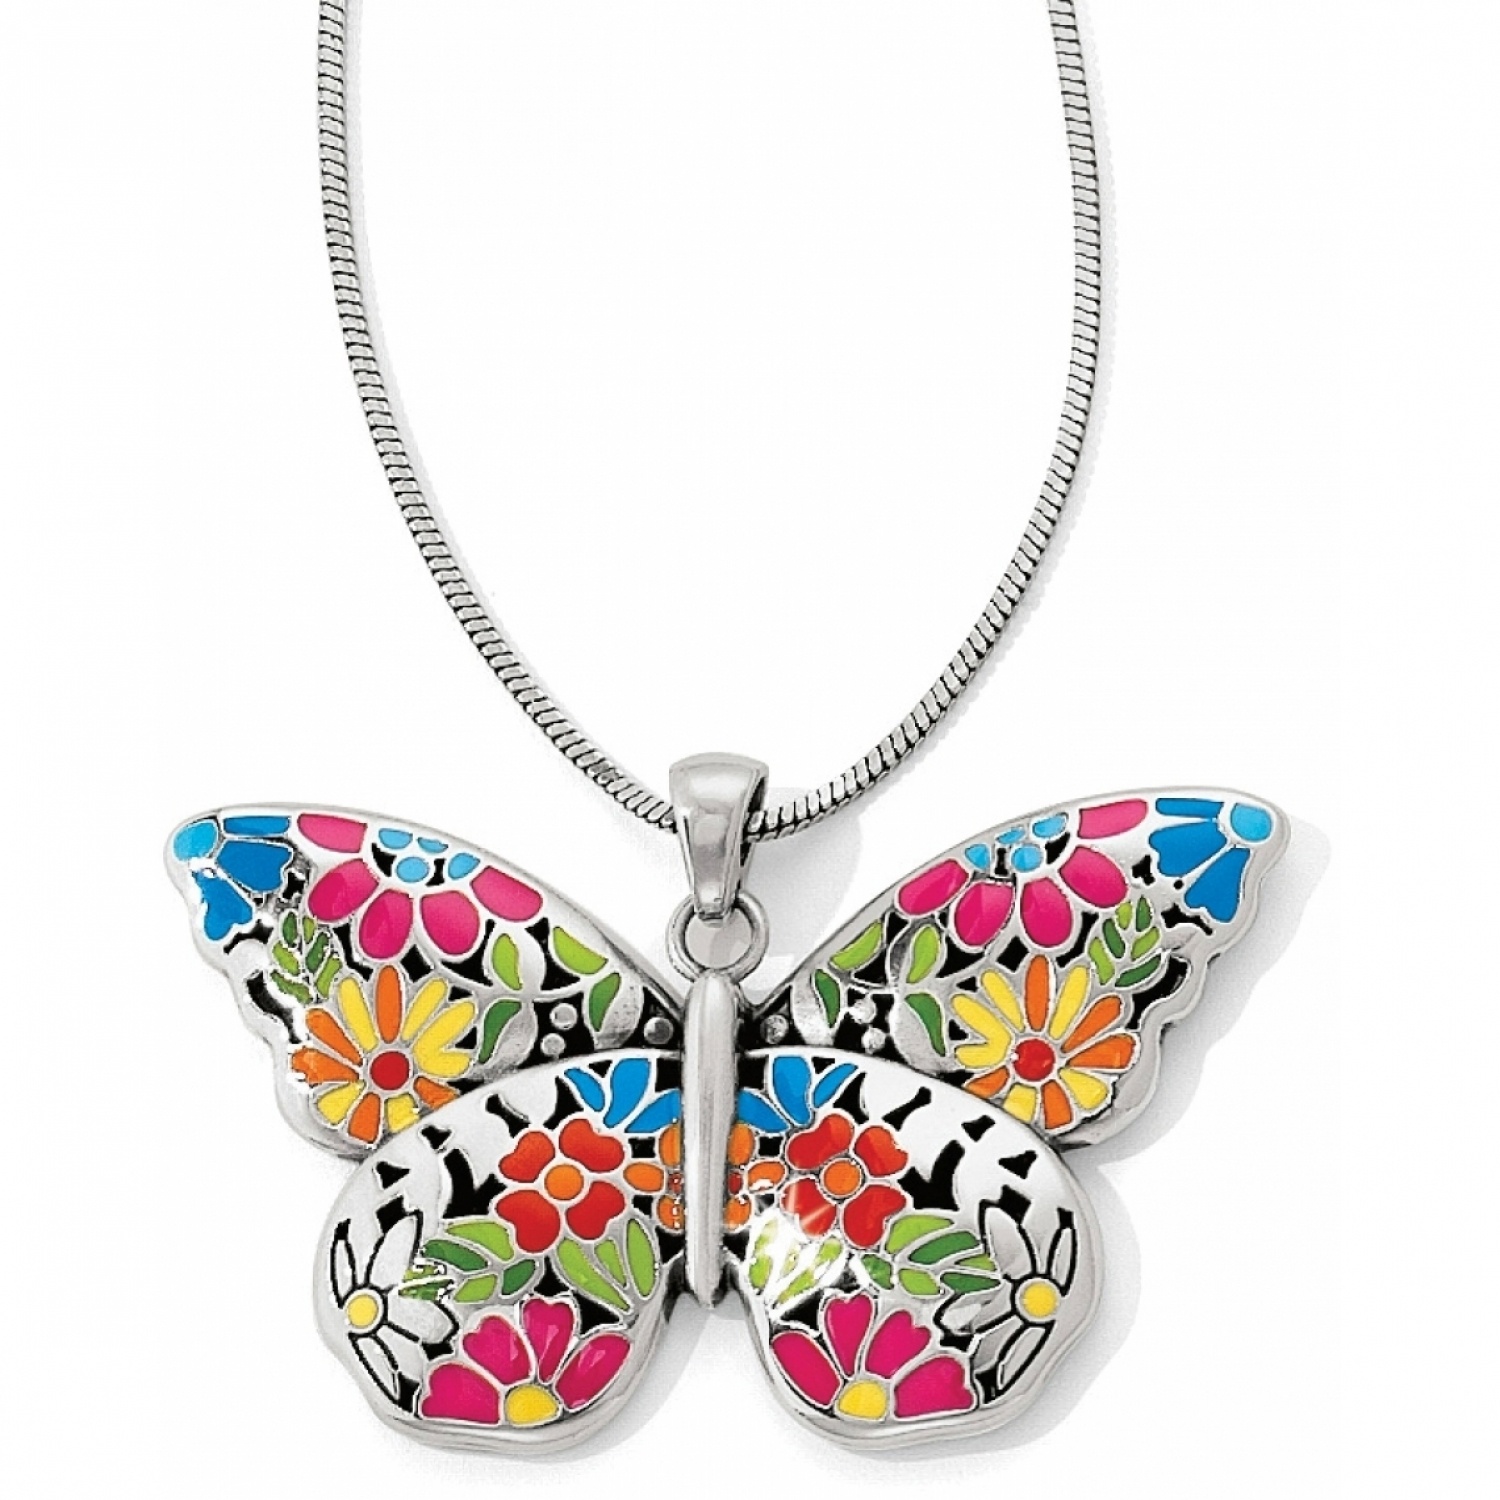 butterfly jewelry suncatcher convertible necklace nkyblph